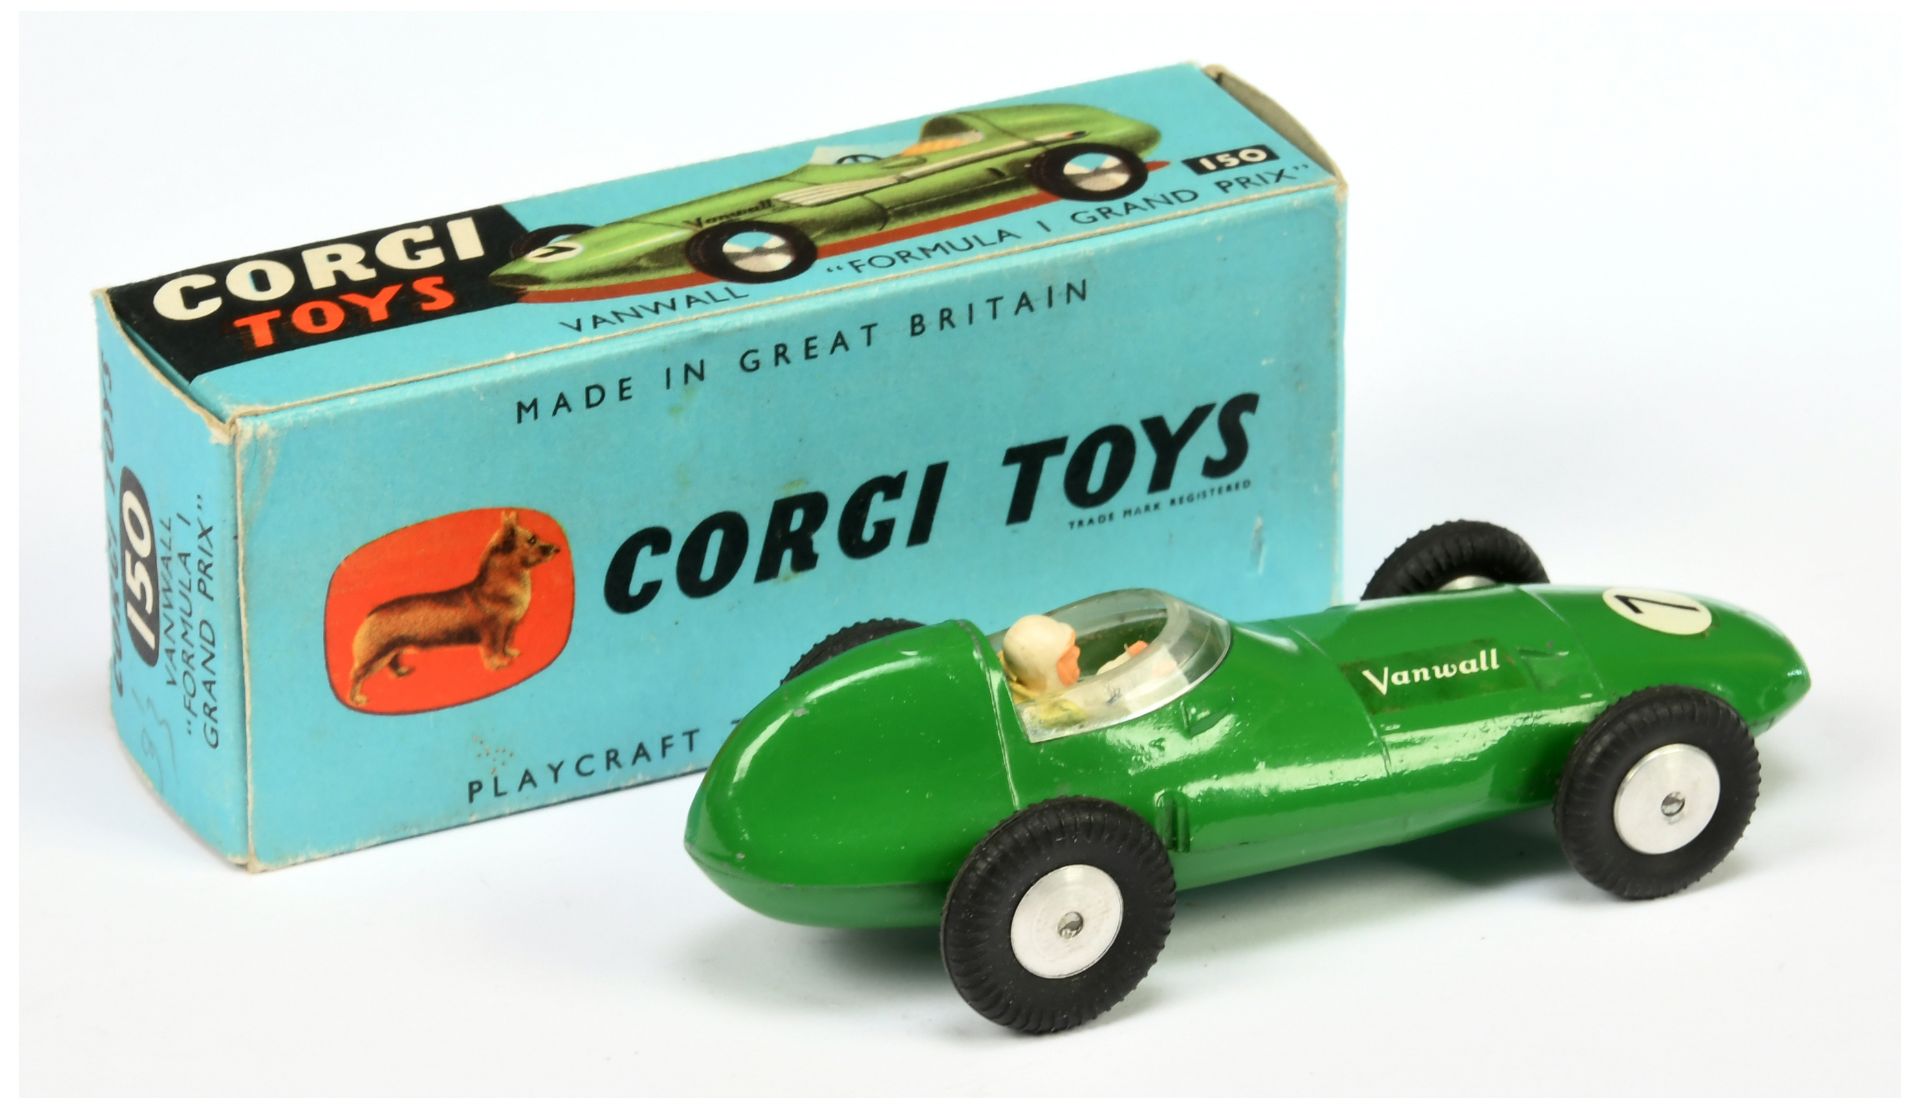 Corgi Toys 150 Vanwall Formula 1 grand Prix Racing Car - Mid-Green body, silver trim and front ve... - Bild 2 aus 2